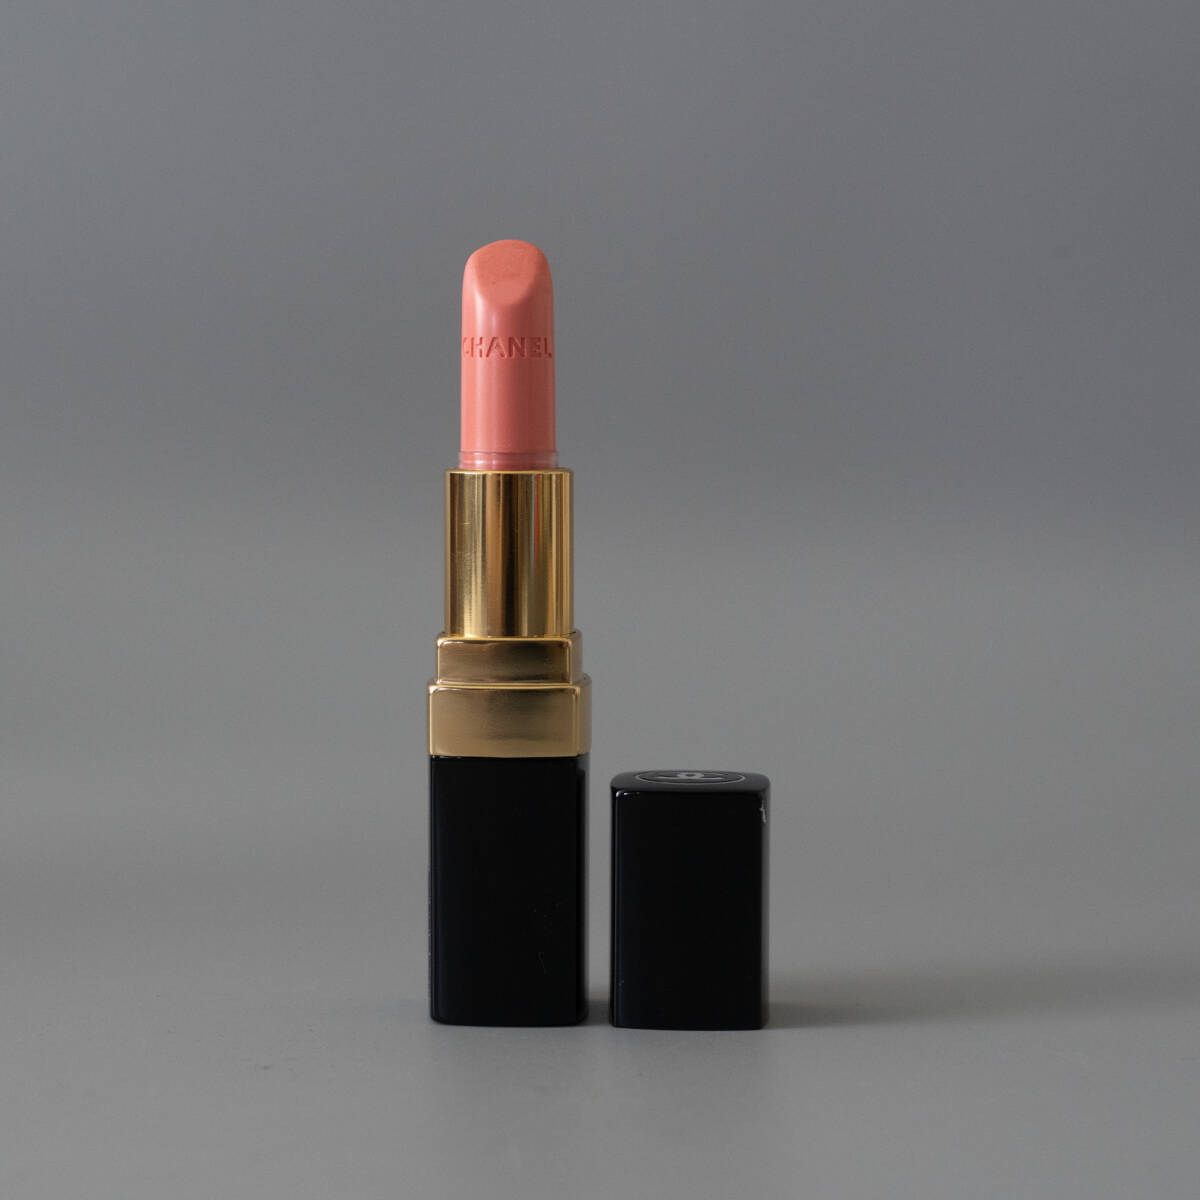 CHANEL Chanel rouge here 422oruga lipstick lipstick cosme 